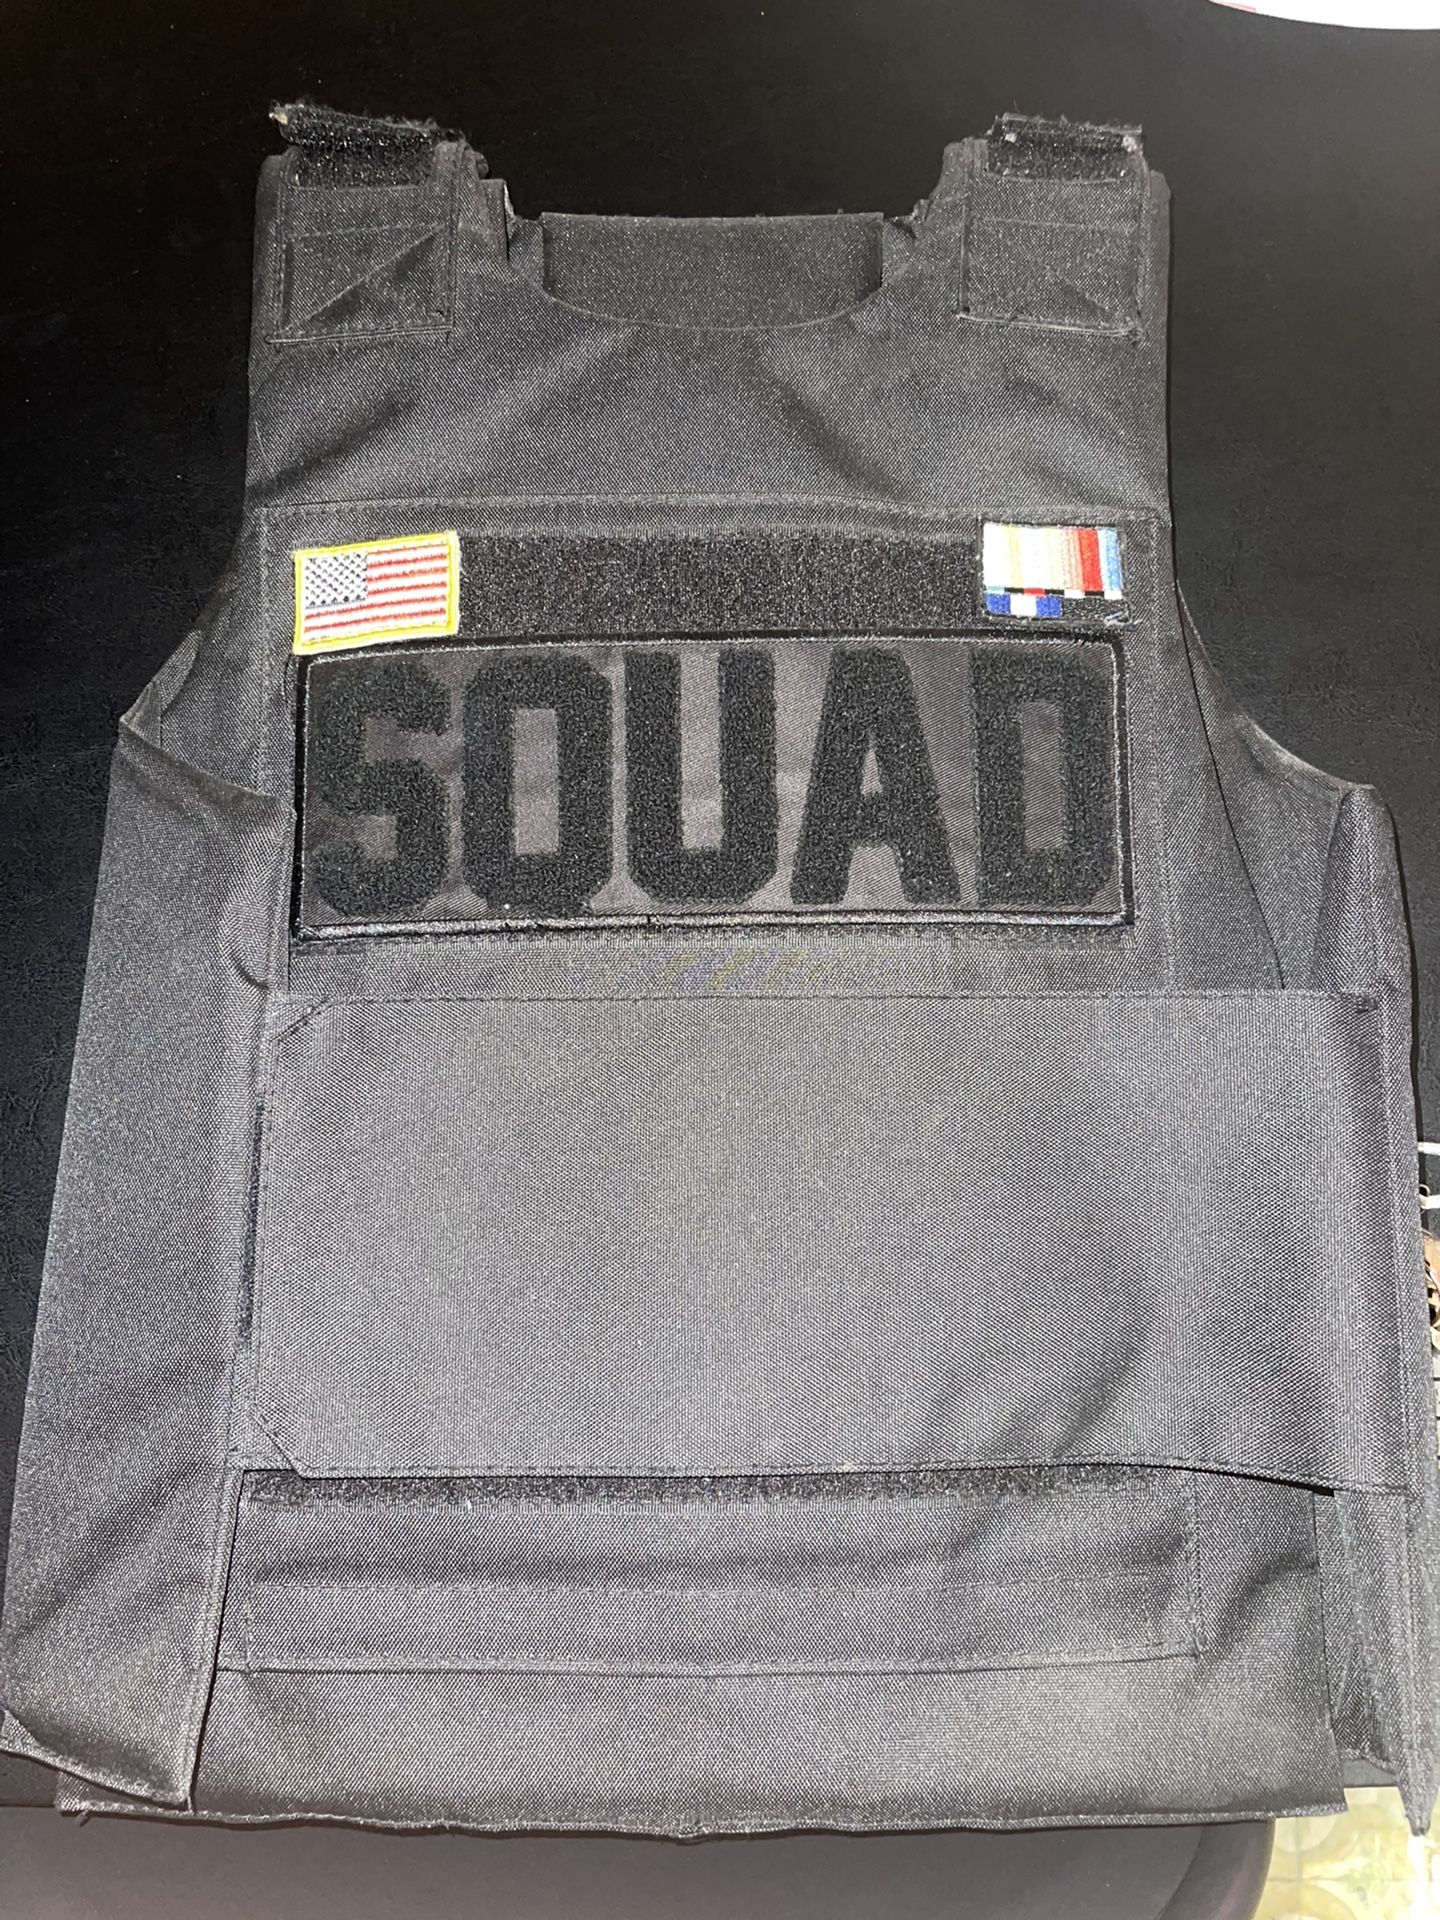 Squad vest